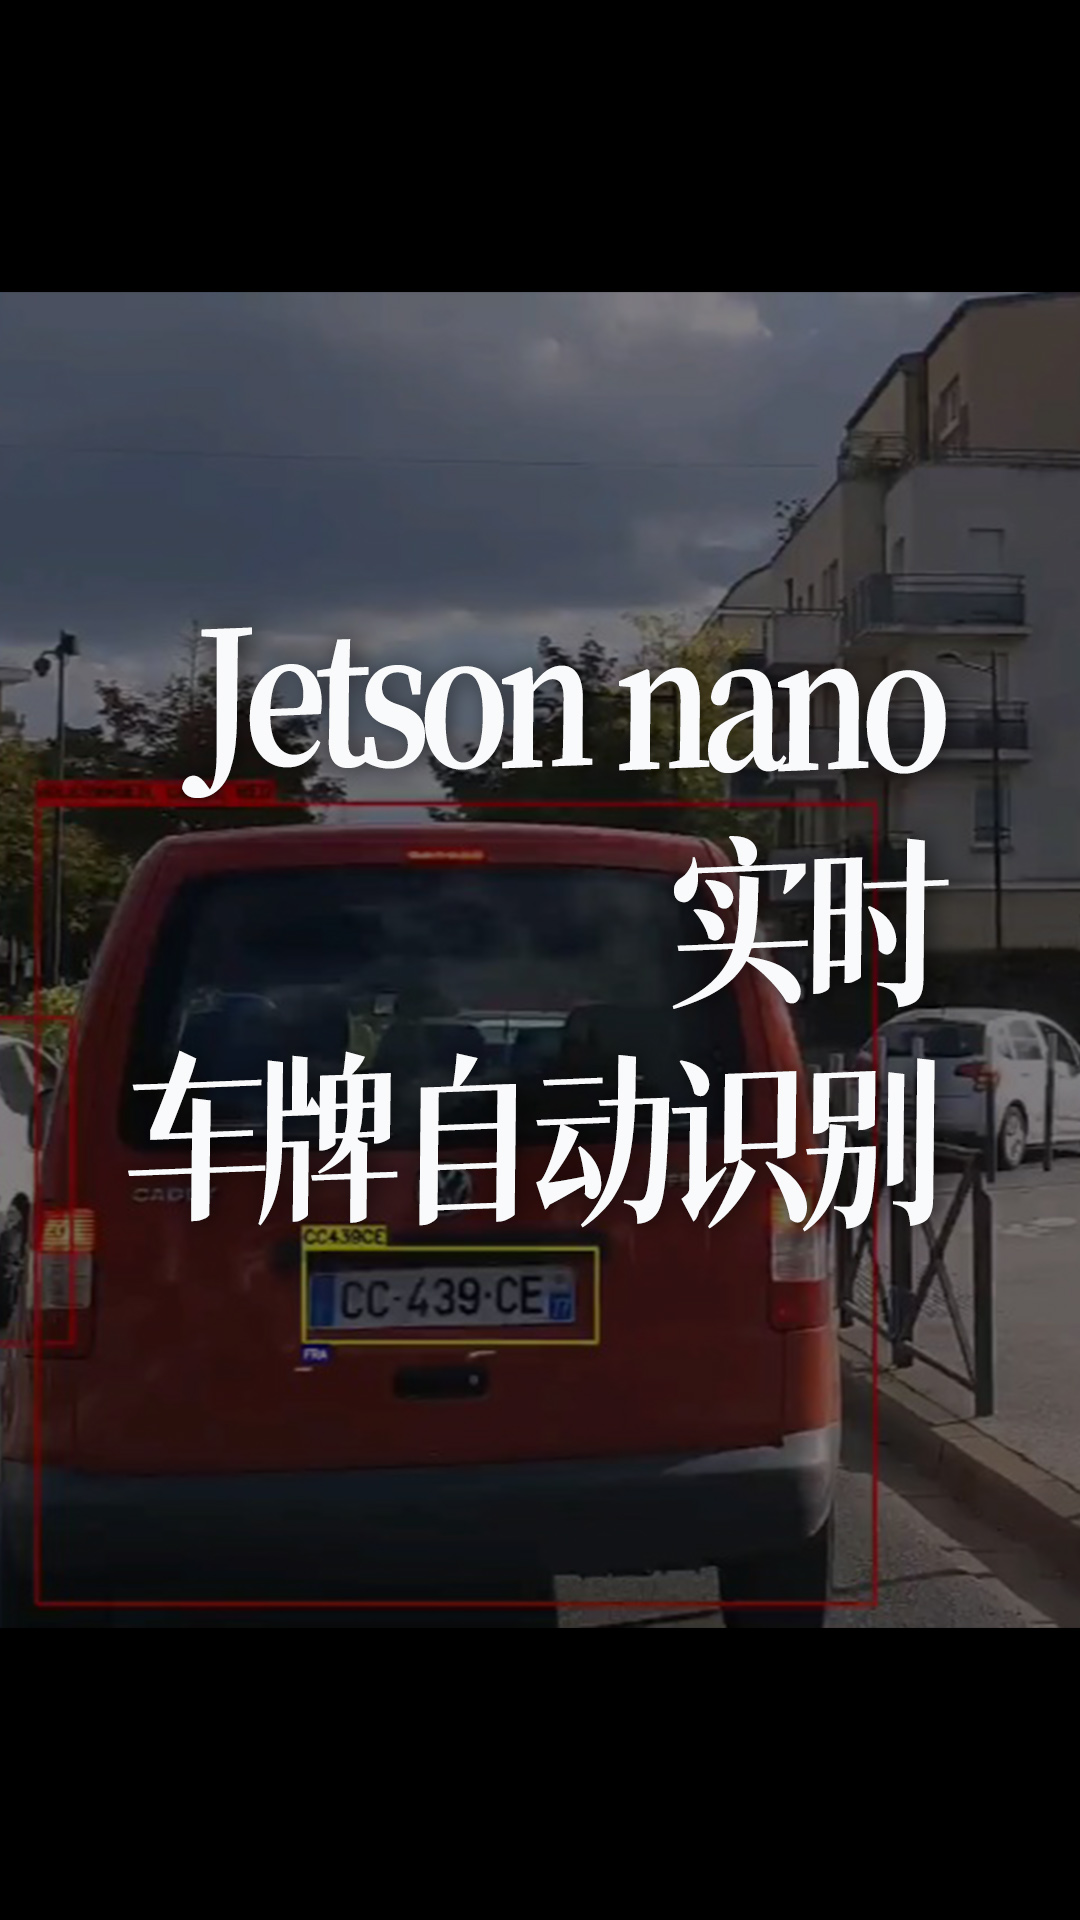 Jetson nano實時車牌自動識別